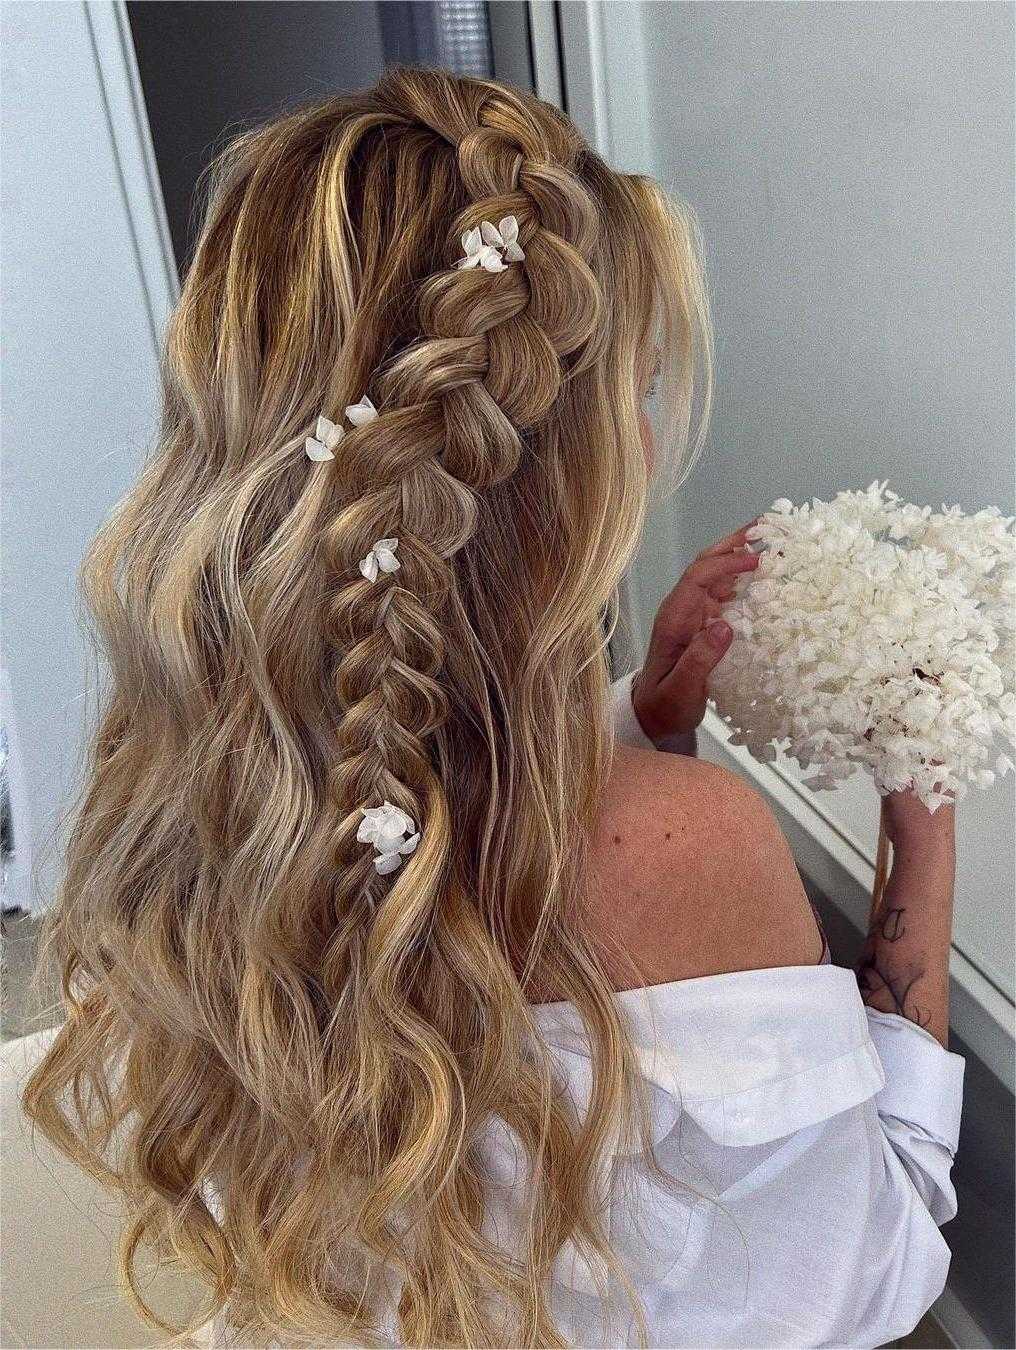 long side braided down birthday hairstyle via zhanna_syniavska